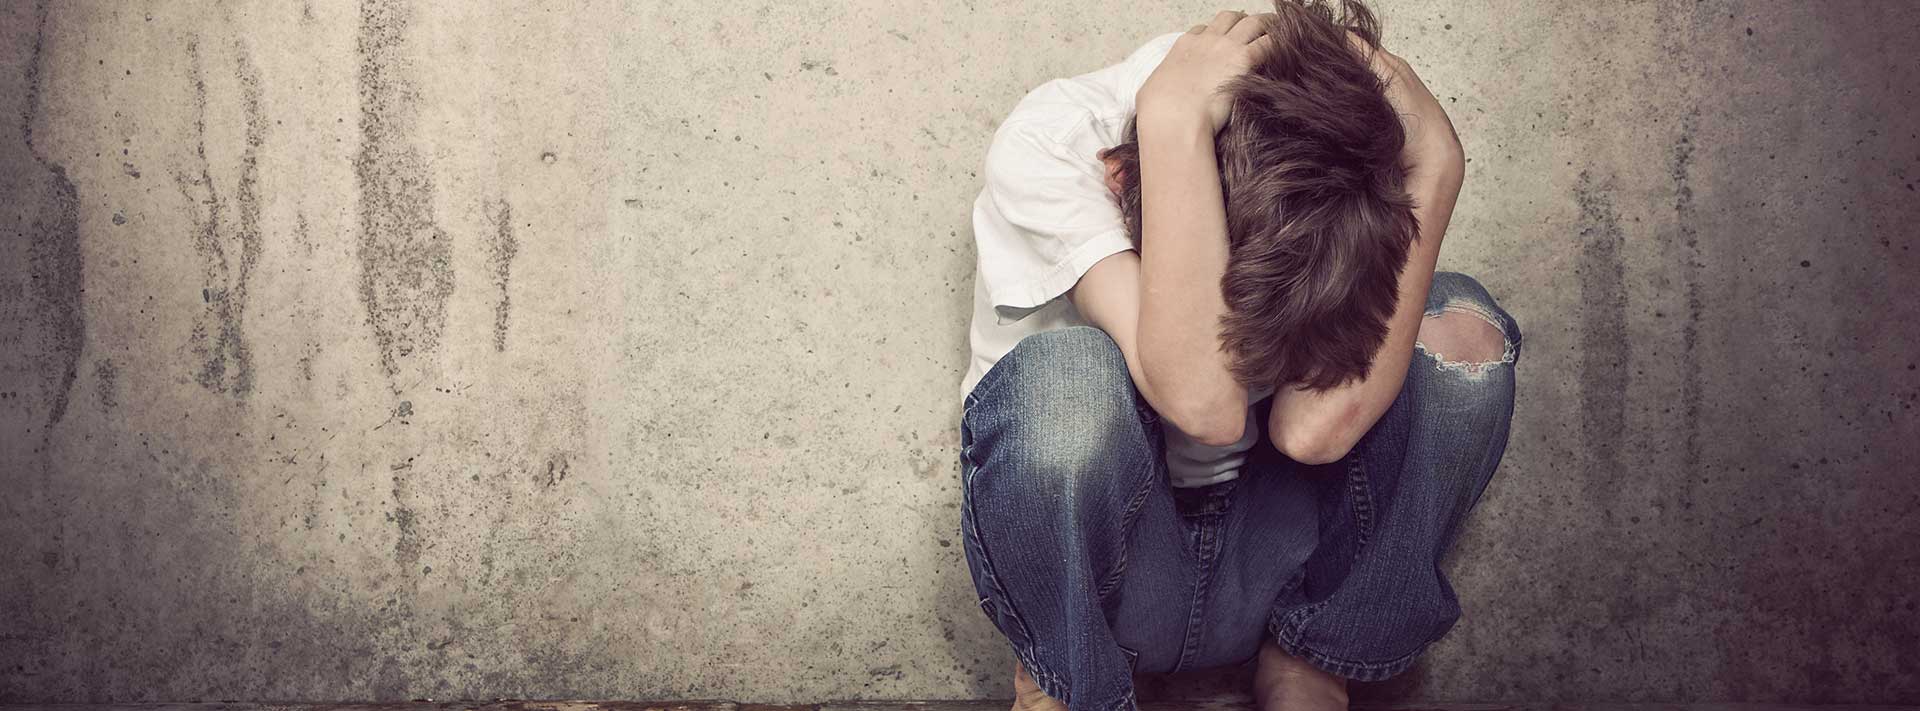 Child Neglect | Child Abuse